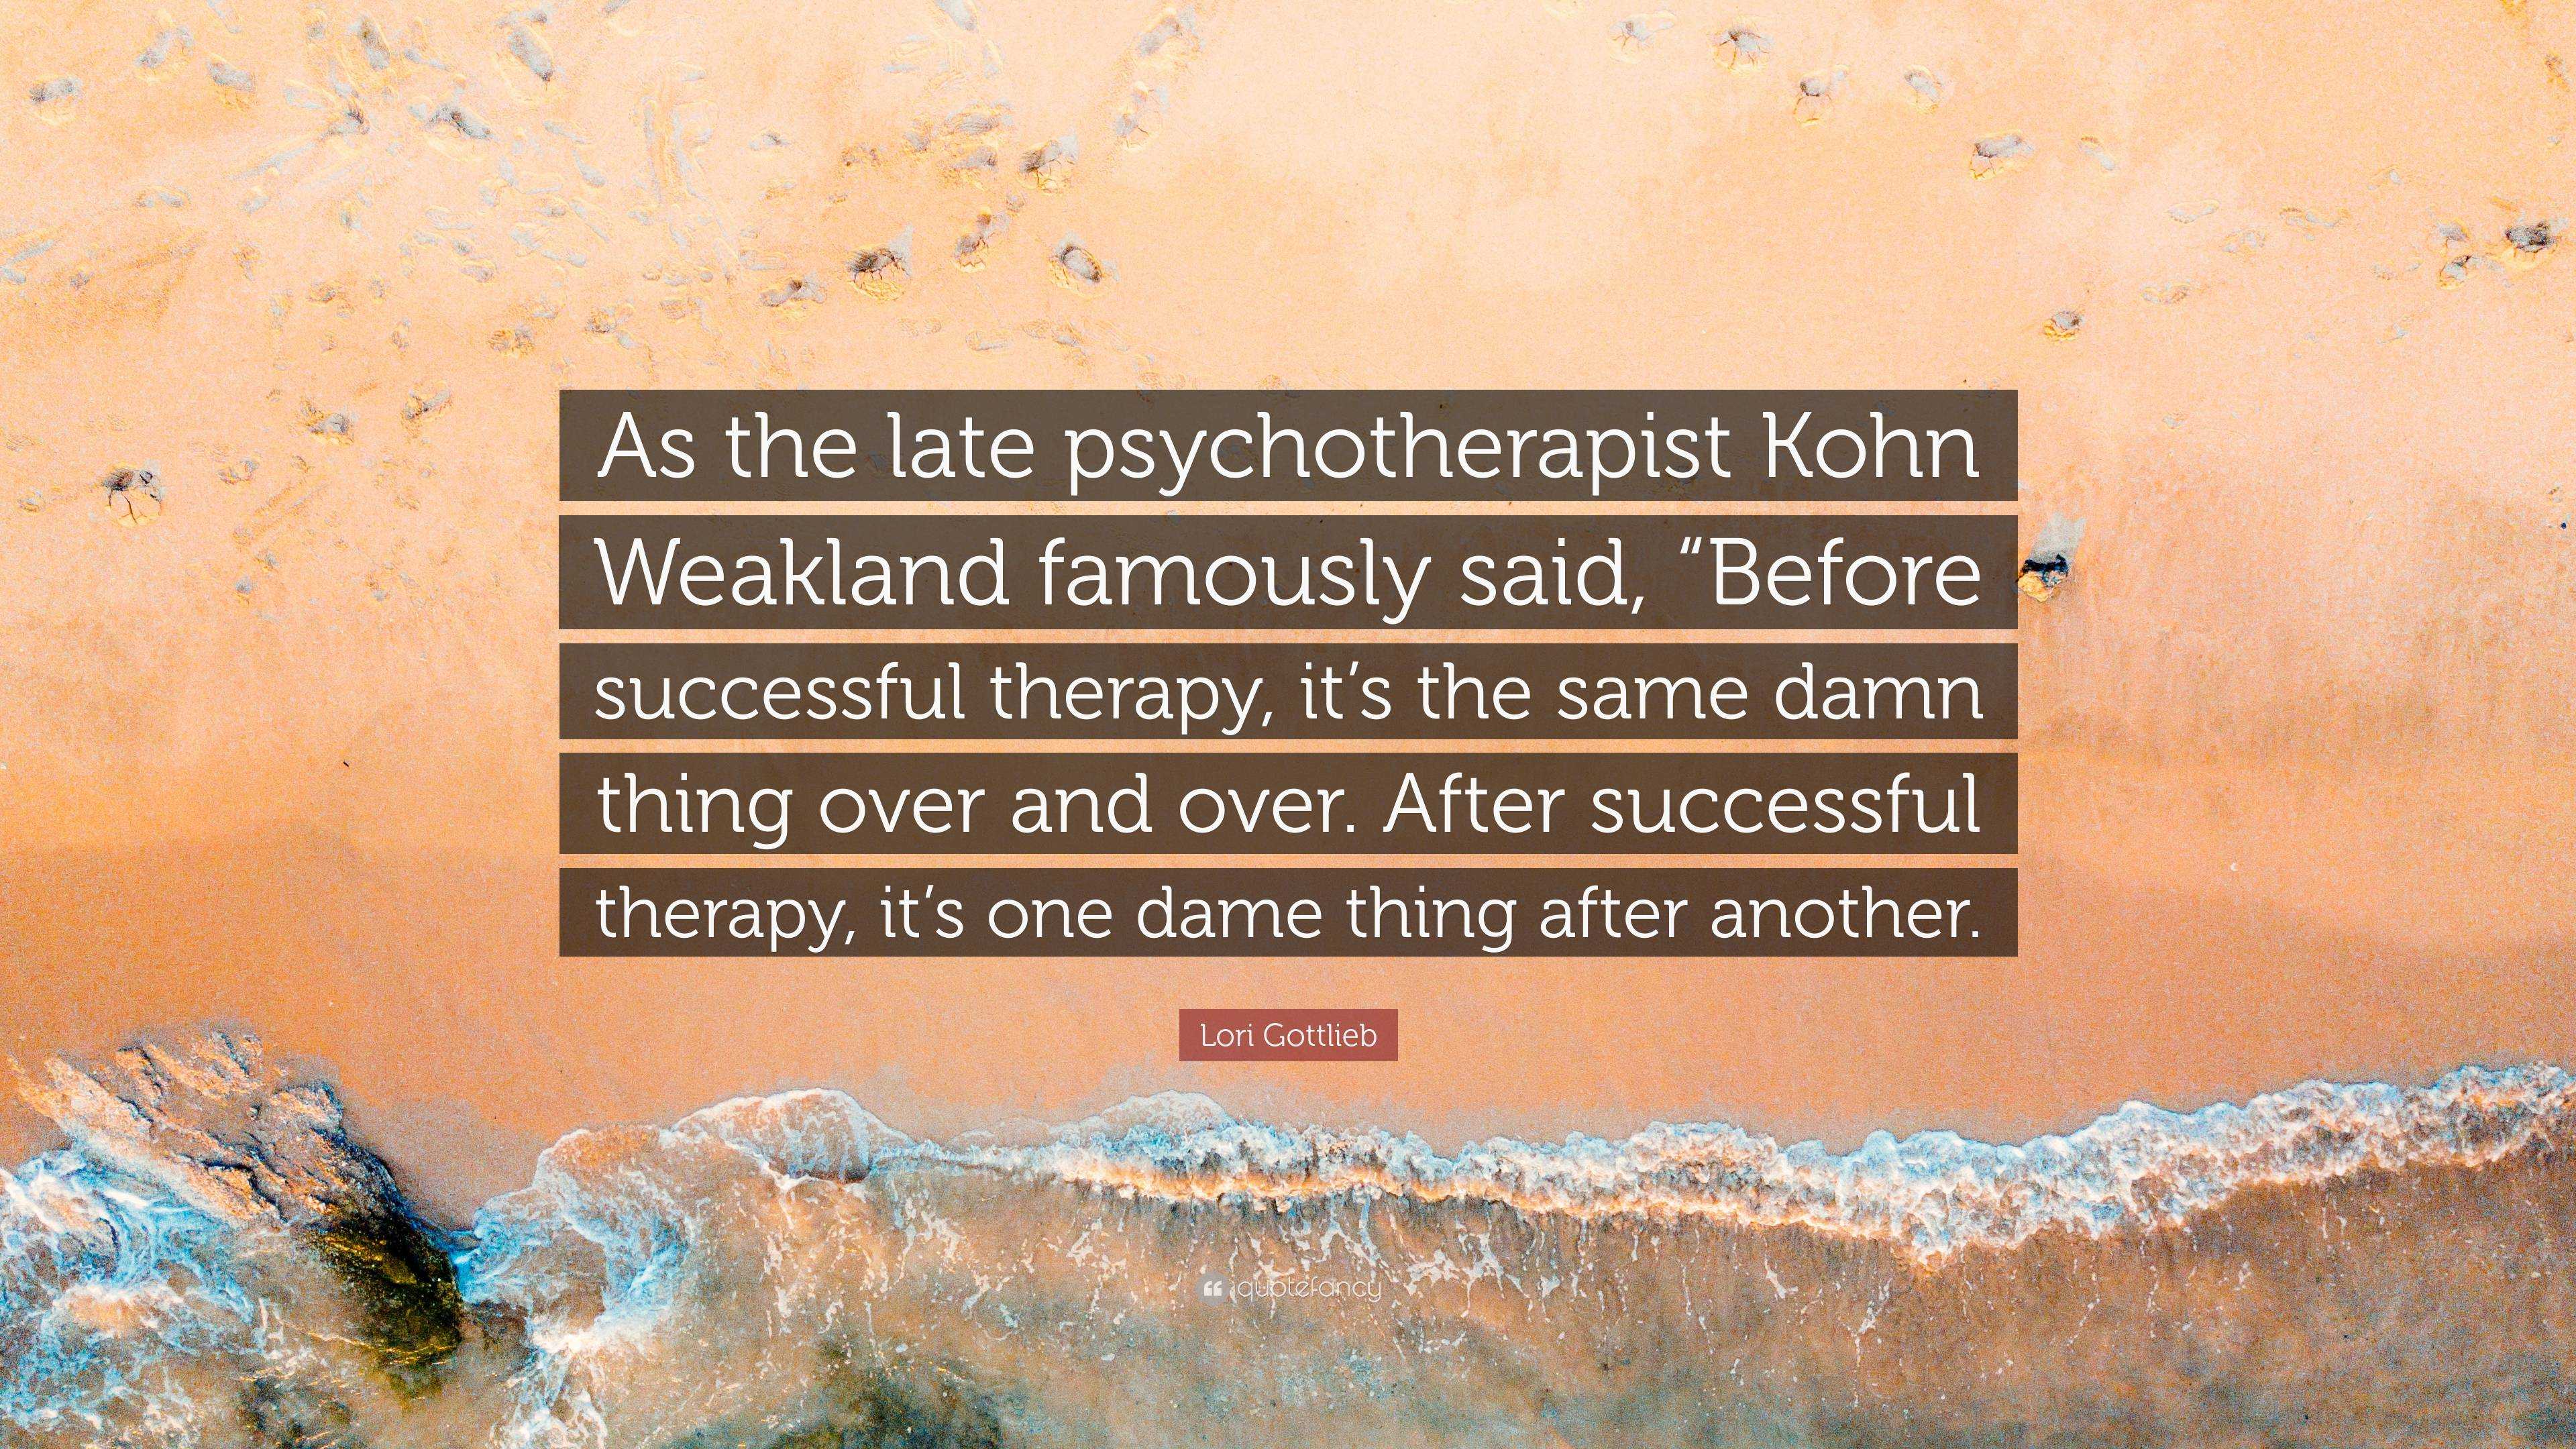 Lori Gottlieb Quote: “As the late psychotherapist Kohn Weakland